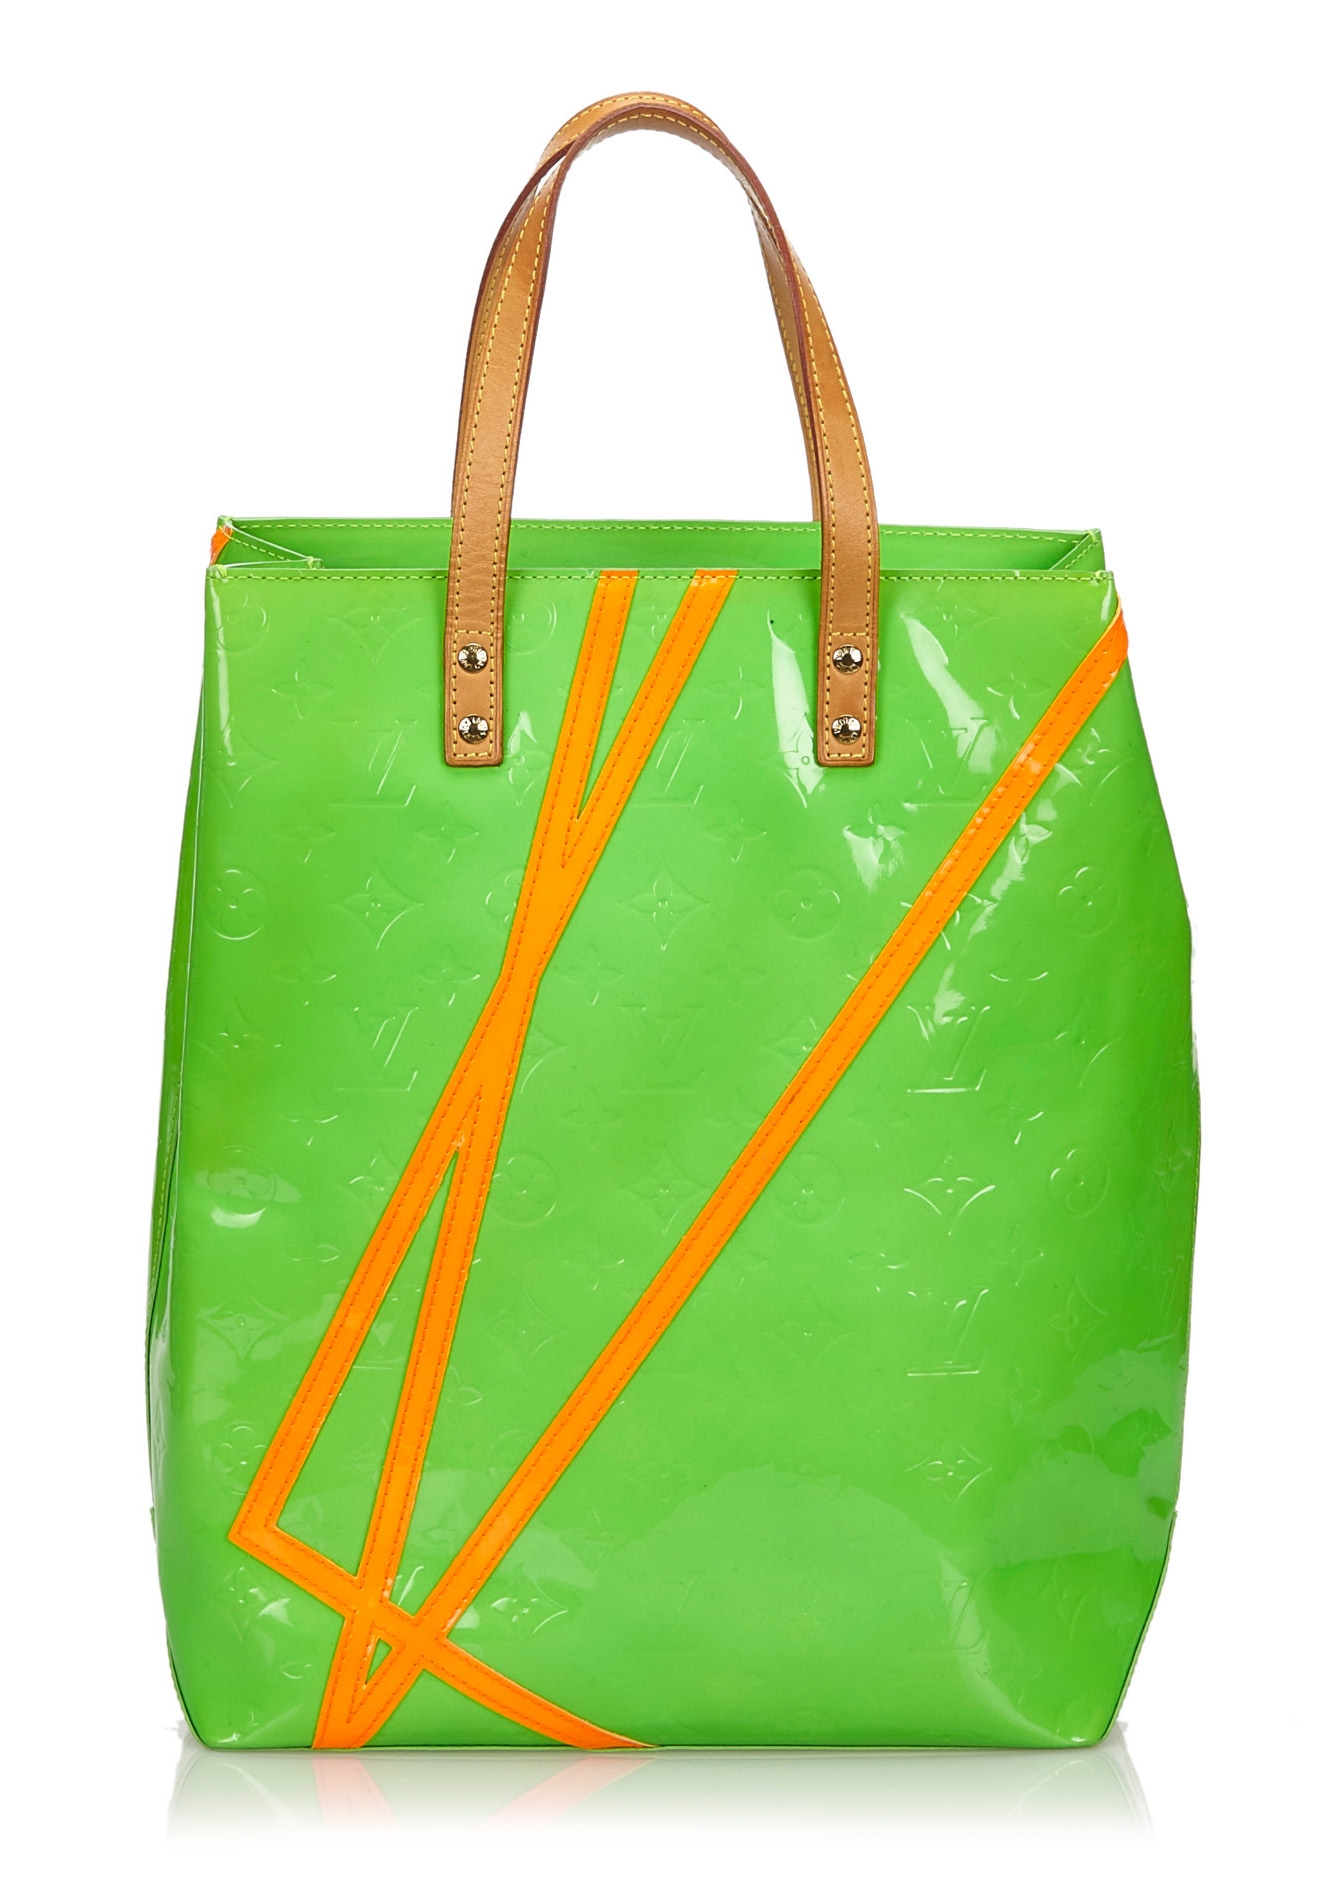 Green Patent Vernis Handbag